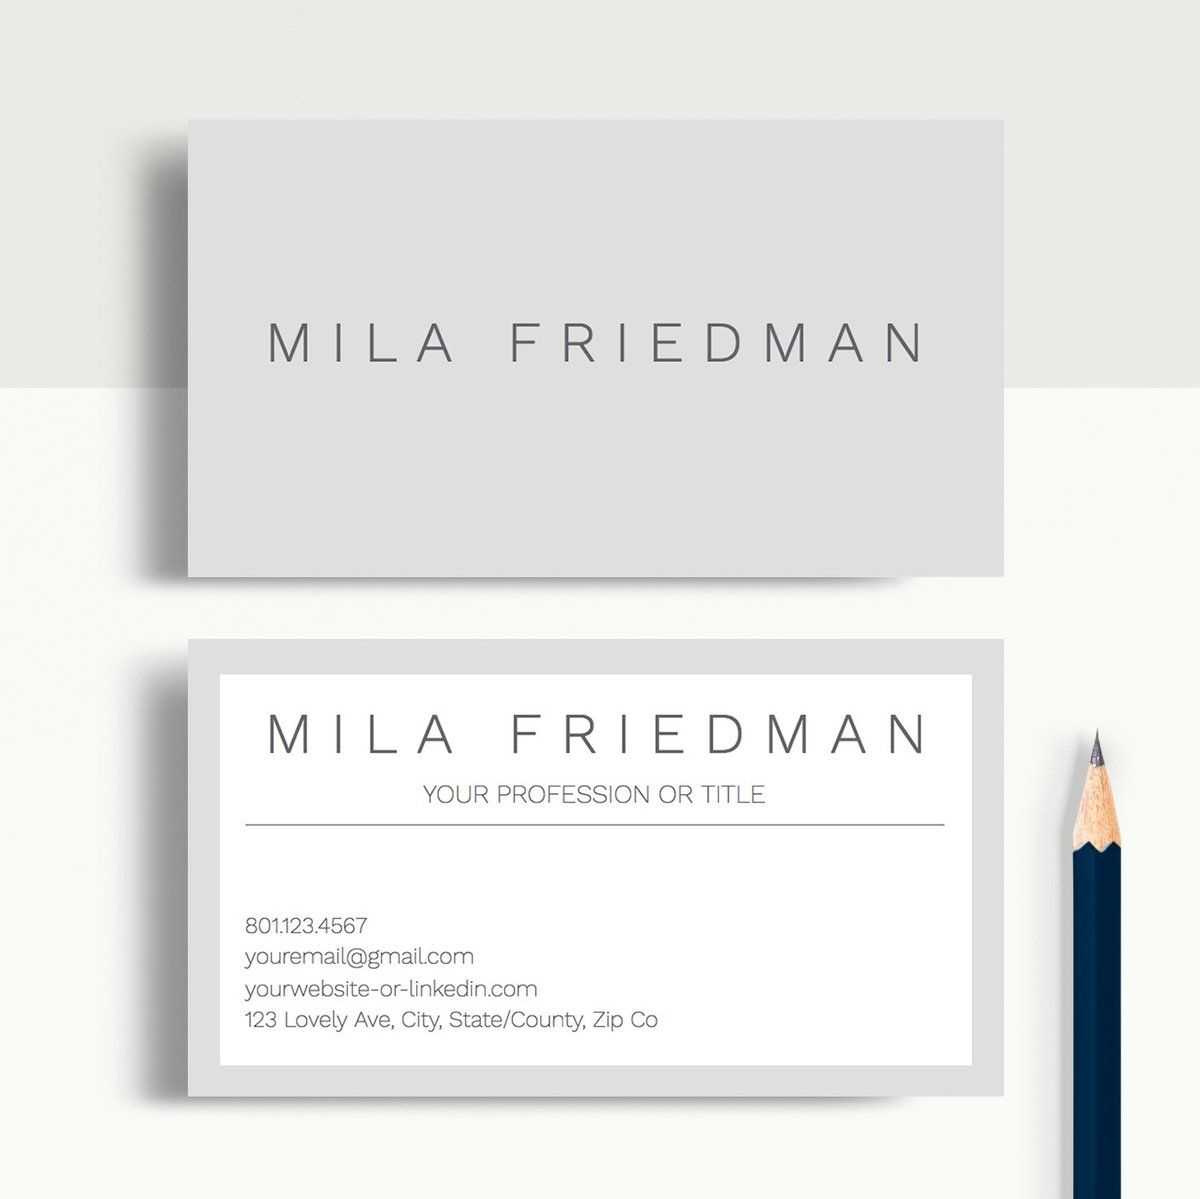 Mila Friedman | Google Docs Professional Business Cards Throughout Business Card Template For Google Docs